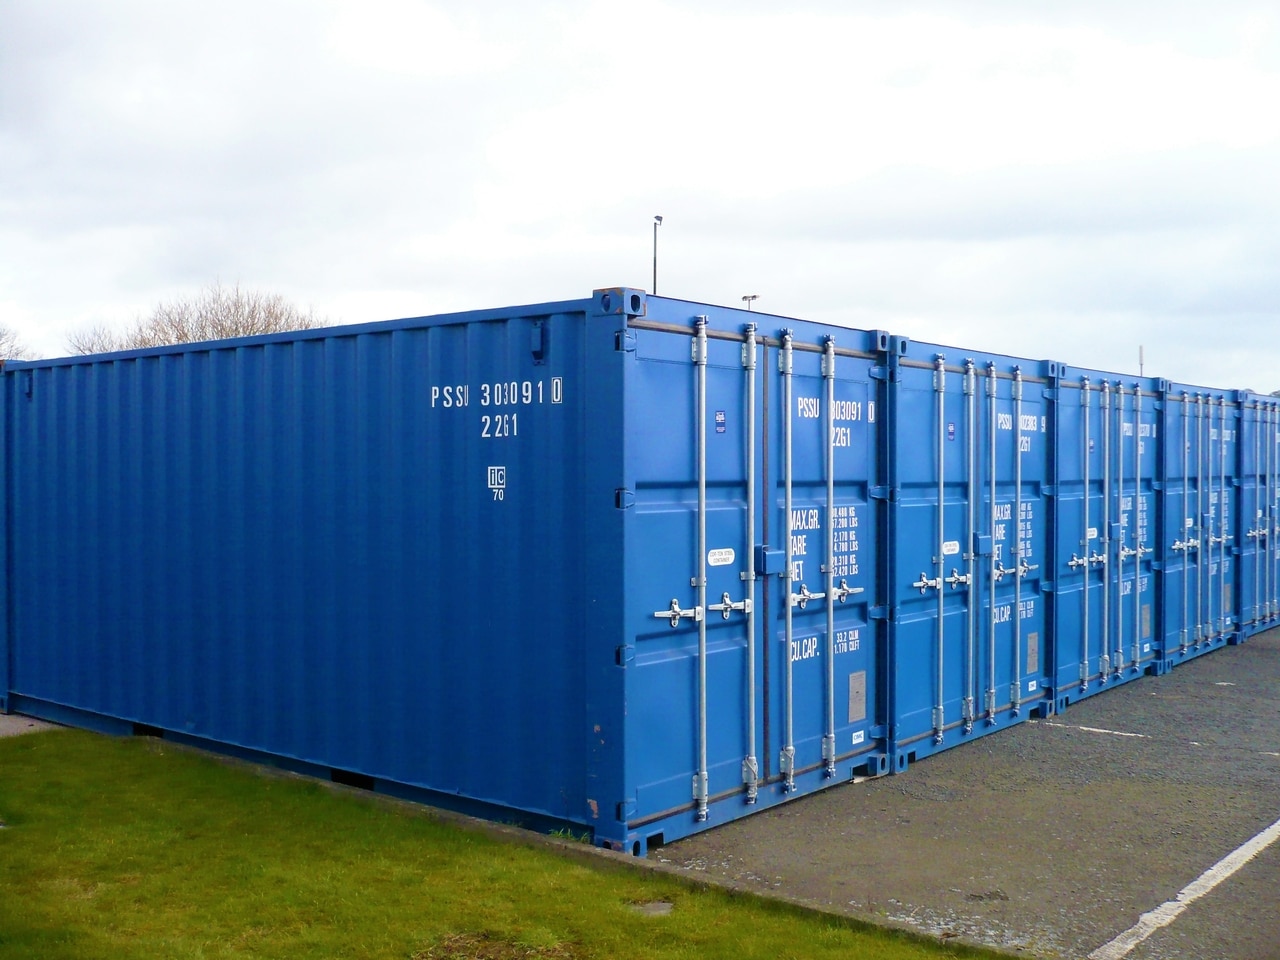 storage container